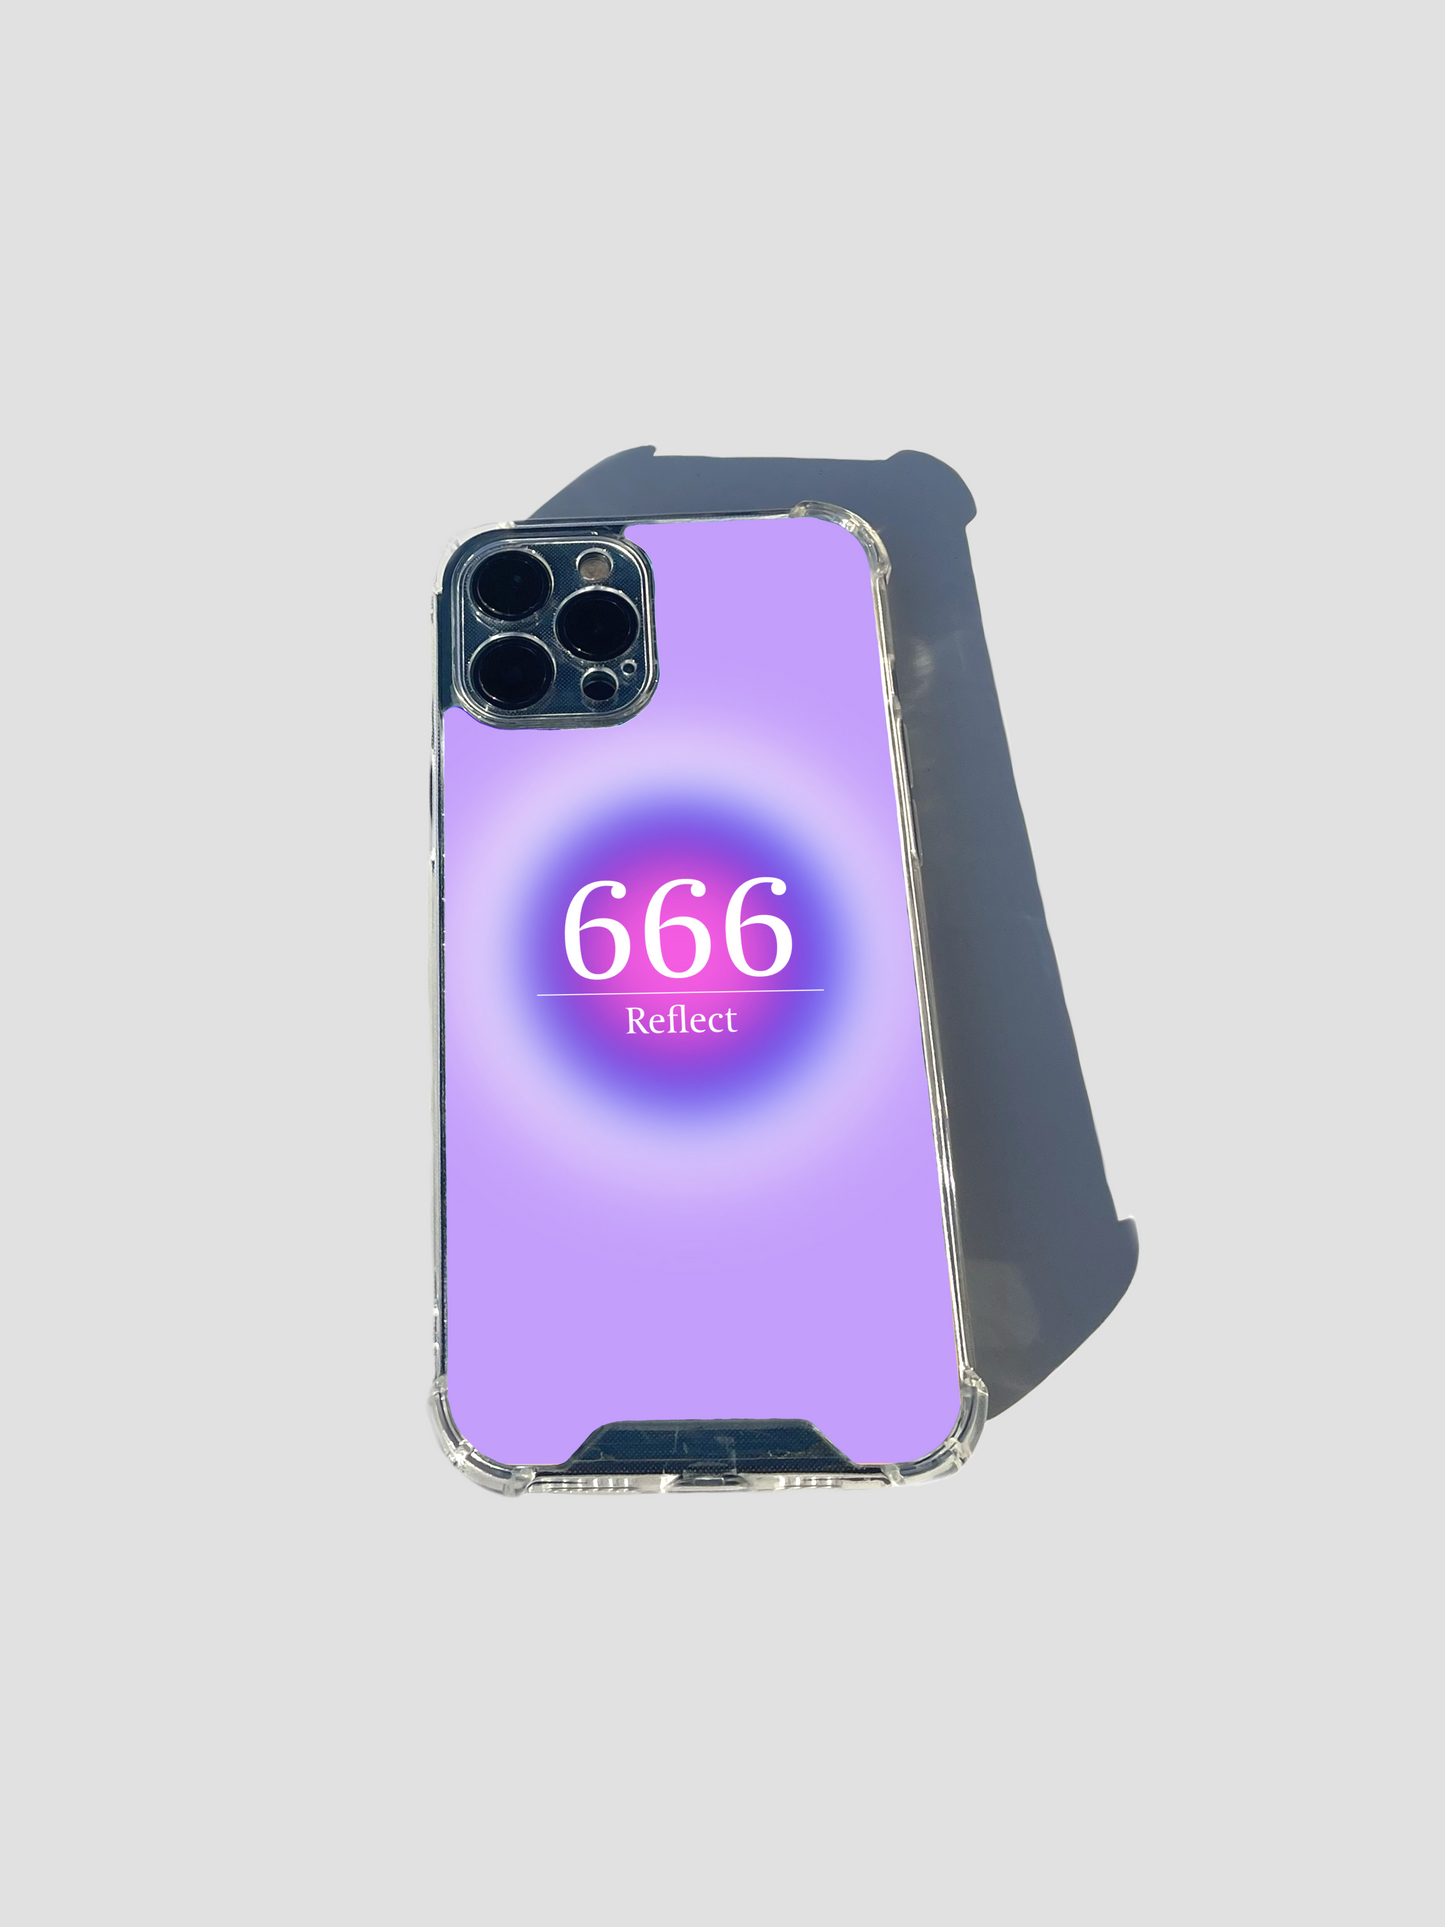 666 Phone Case